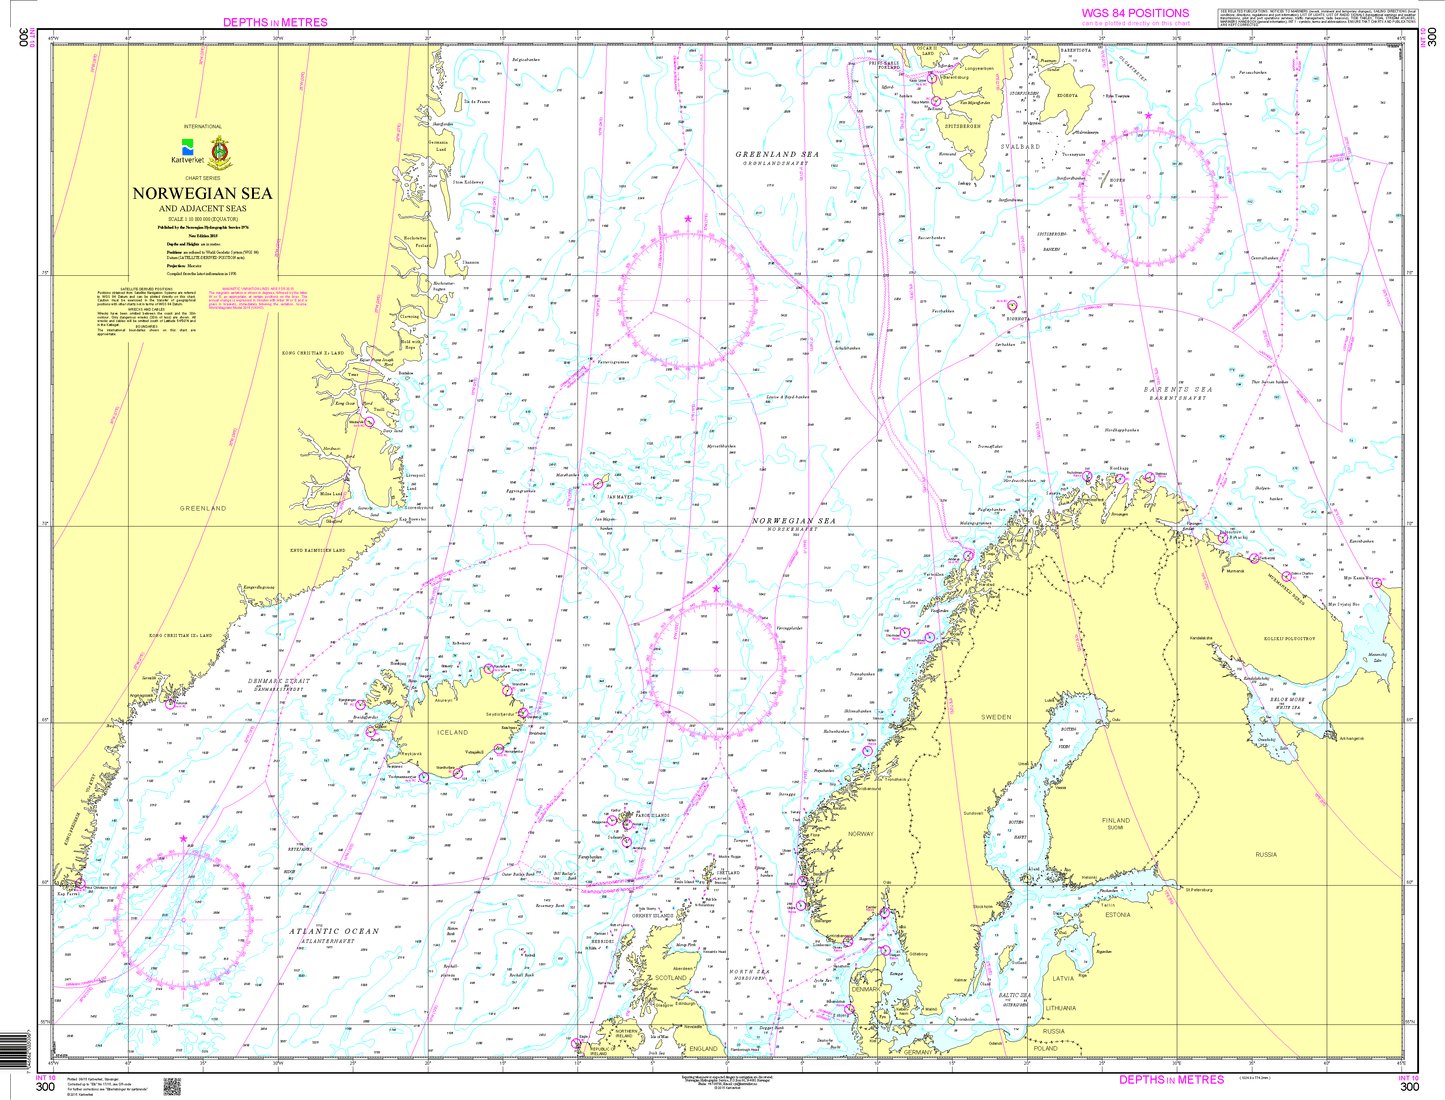 300 Norwegian Sea and adjacent seas